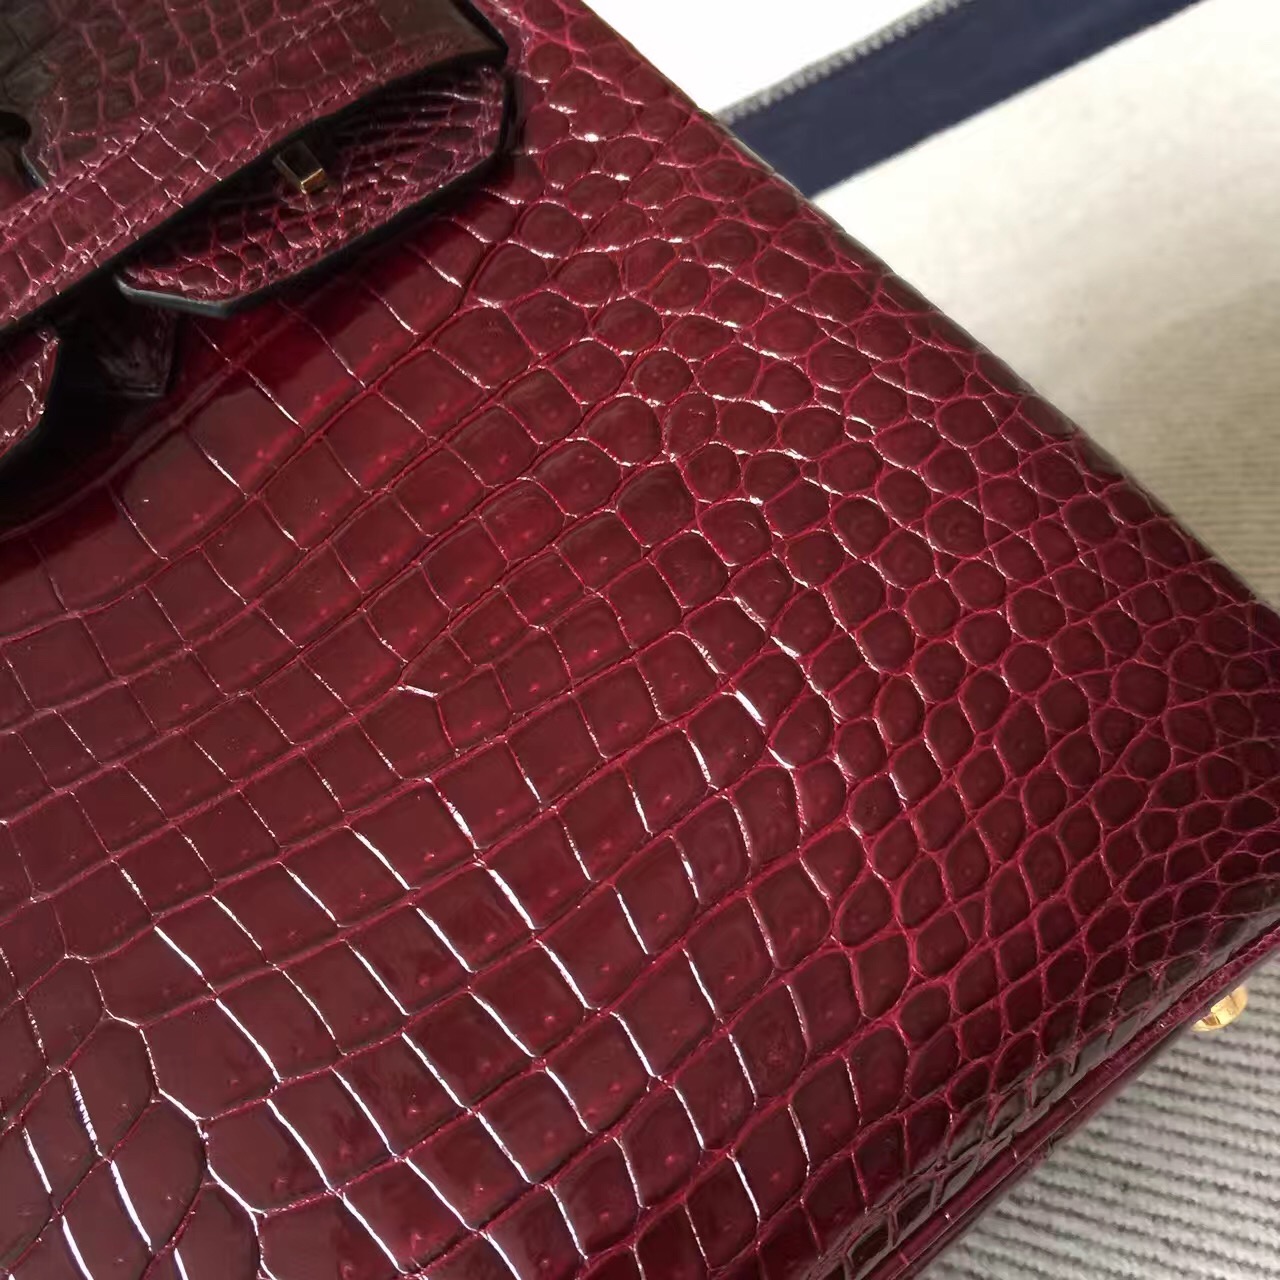 Hand Stitching Hermes Birkin Bag30cm in Bordeaux Porosus Shiny Crocodile Leather